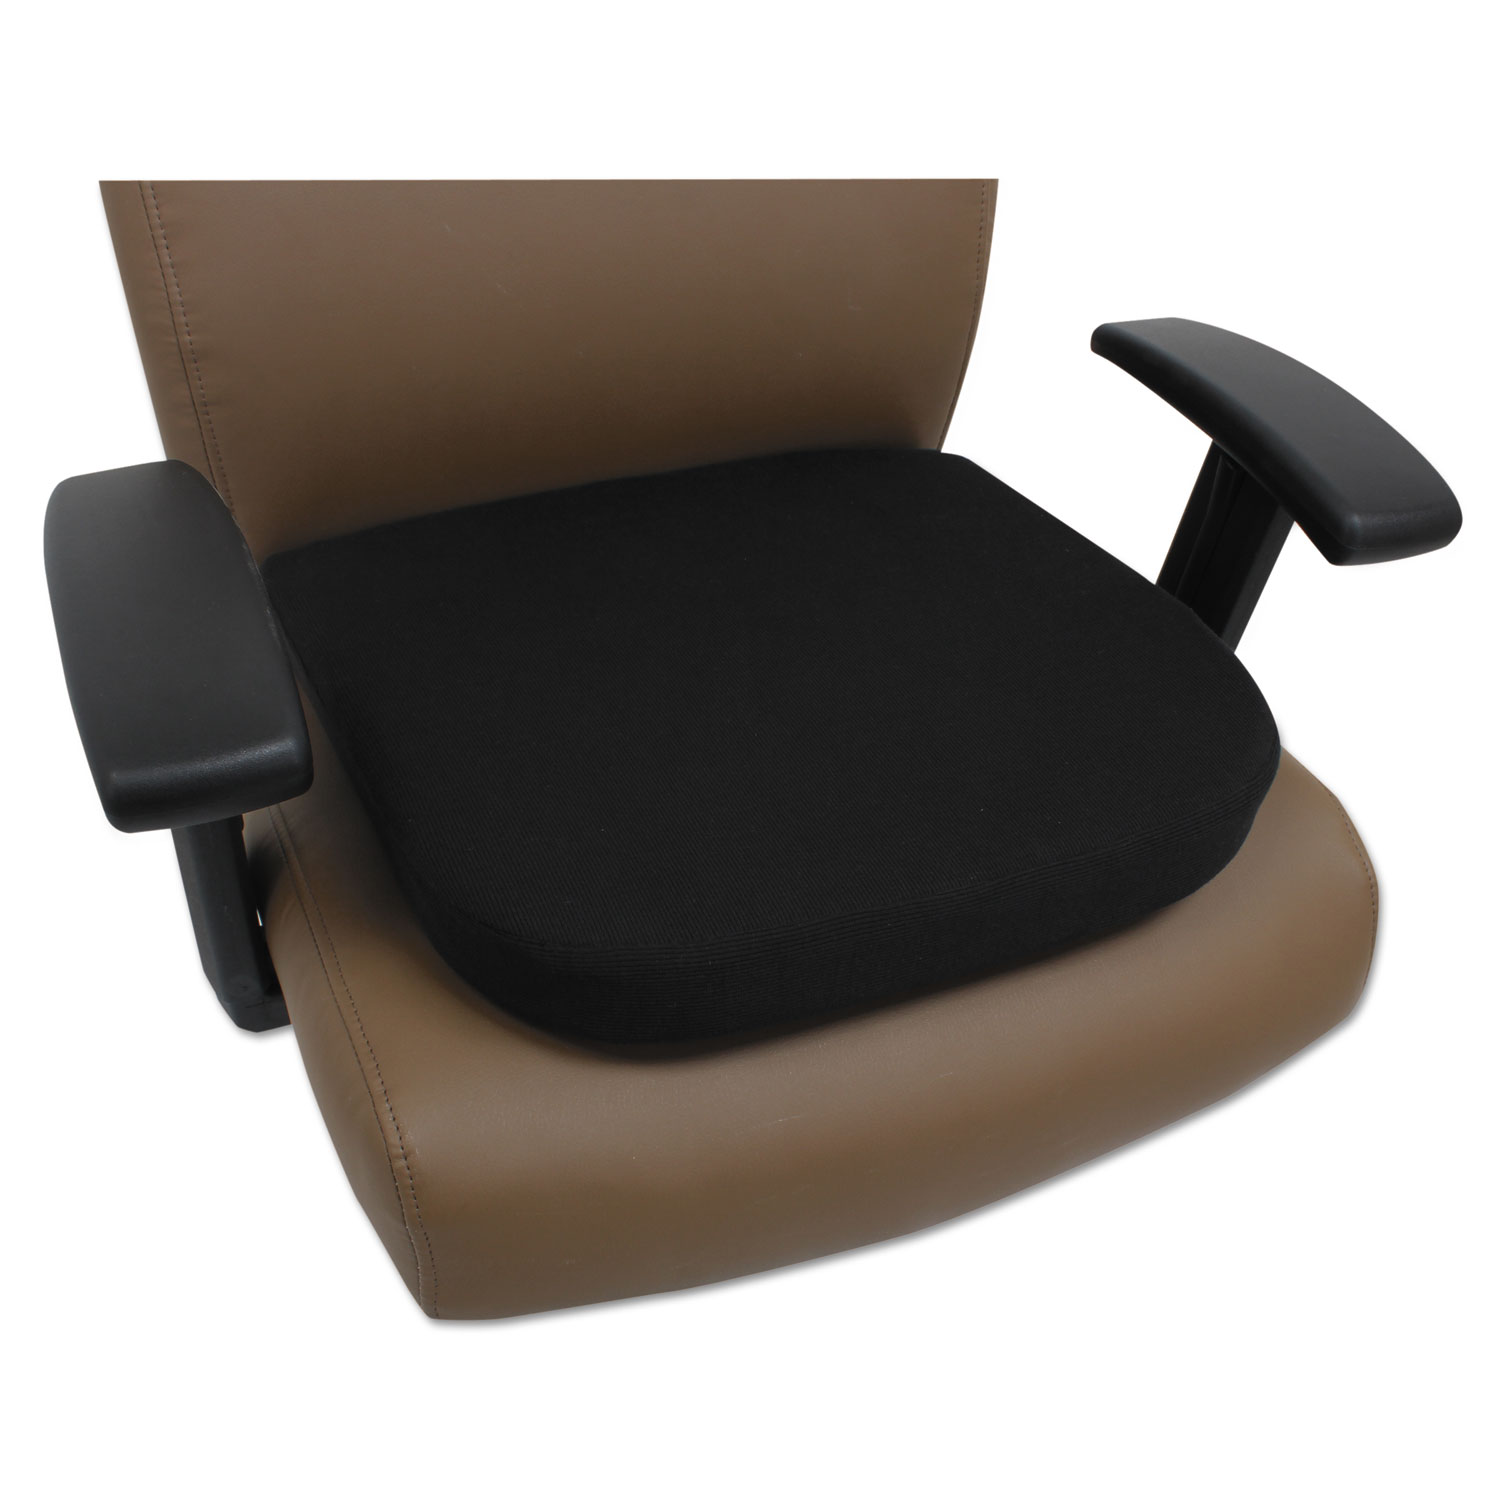  Alera ALECGC511 Cooling Gel Memory Foam Seat Cushion, 16.5 x 15.75 x 2.75, Black (ALECGC511) 